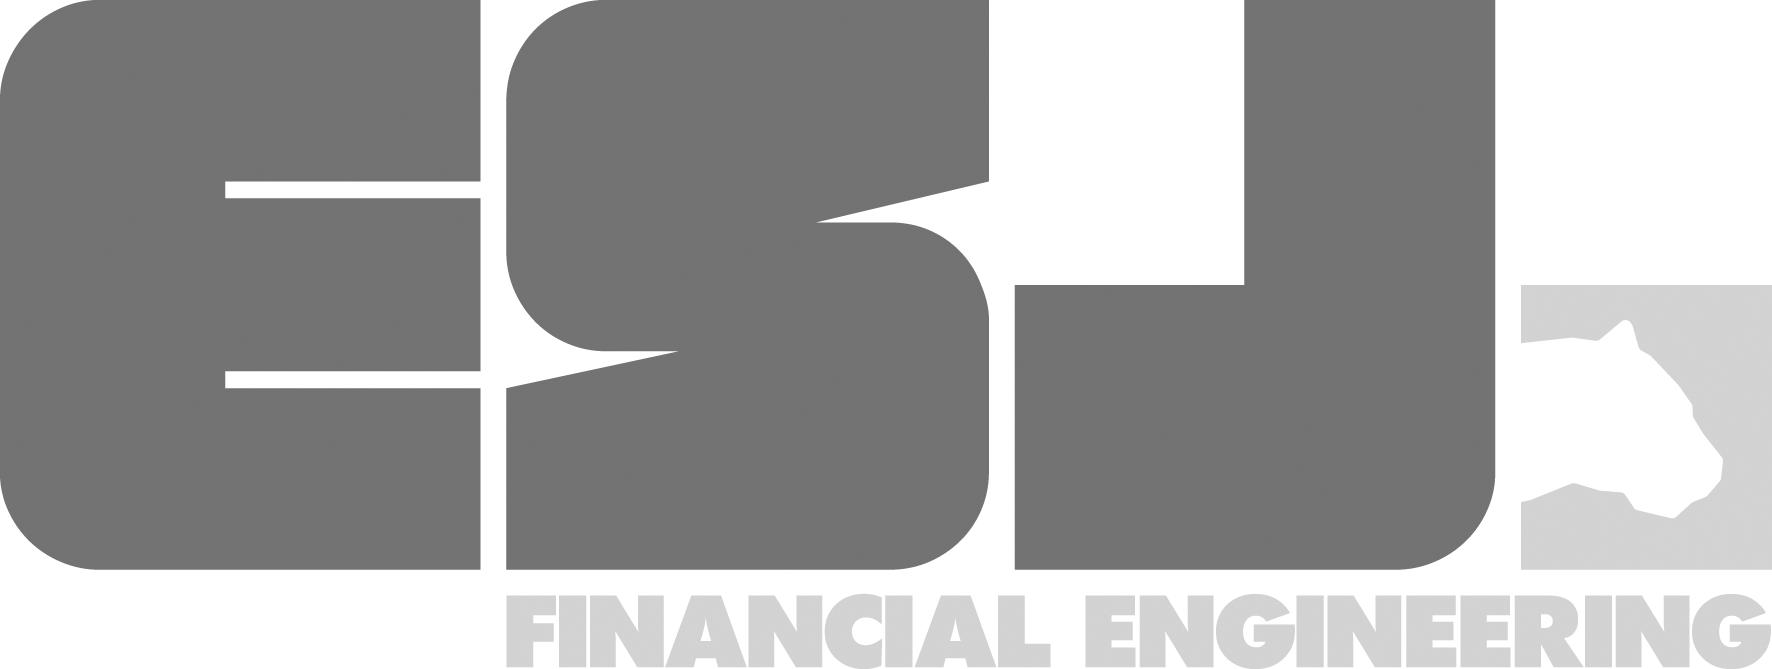 ESJ financial engineering logo